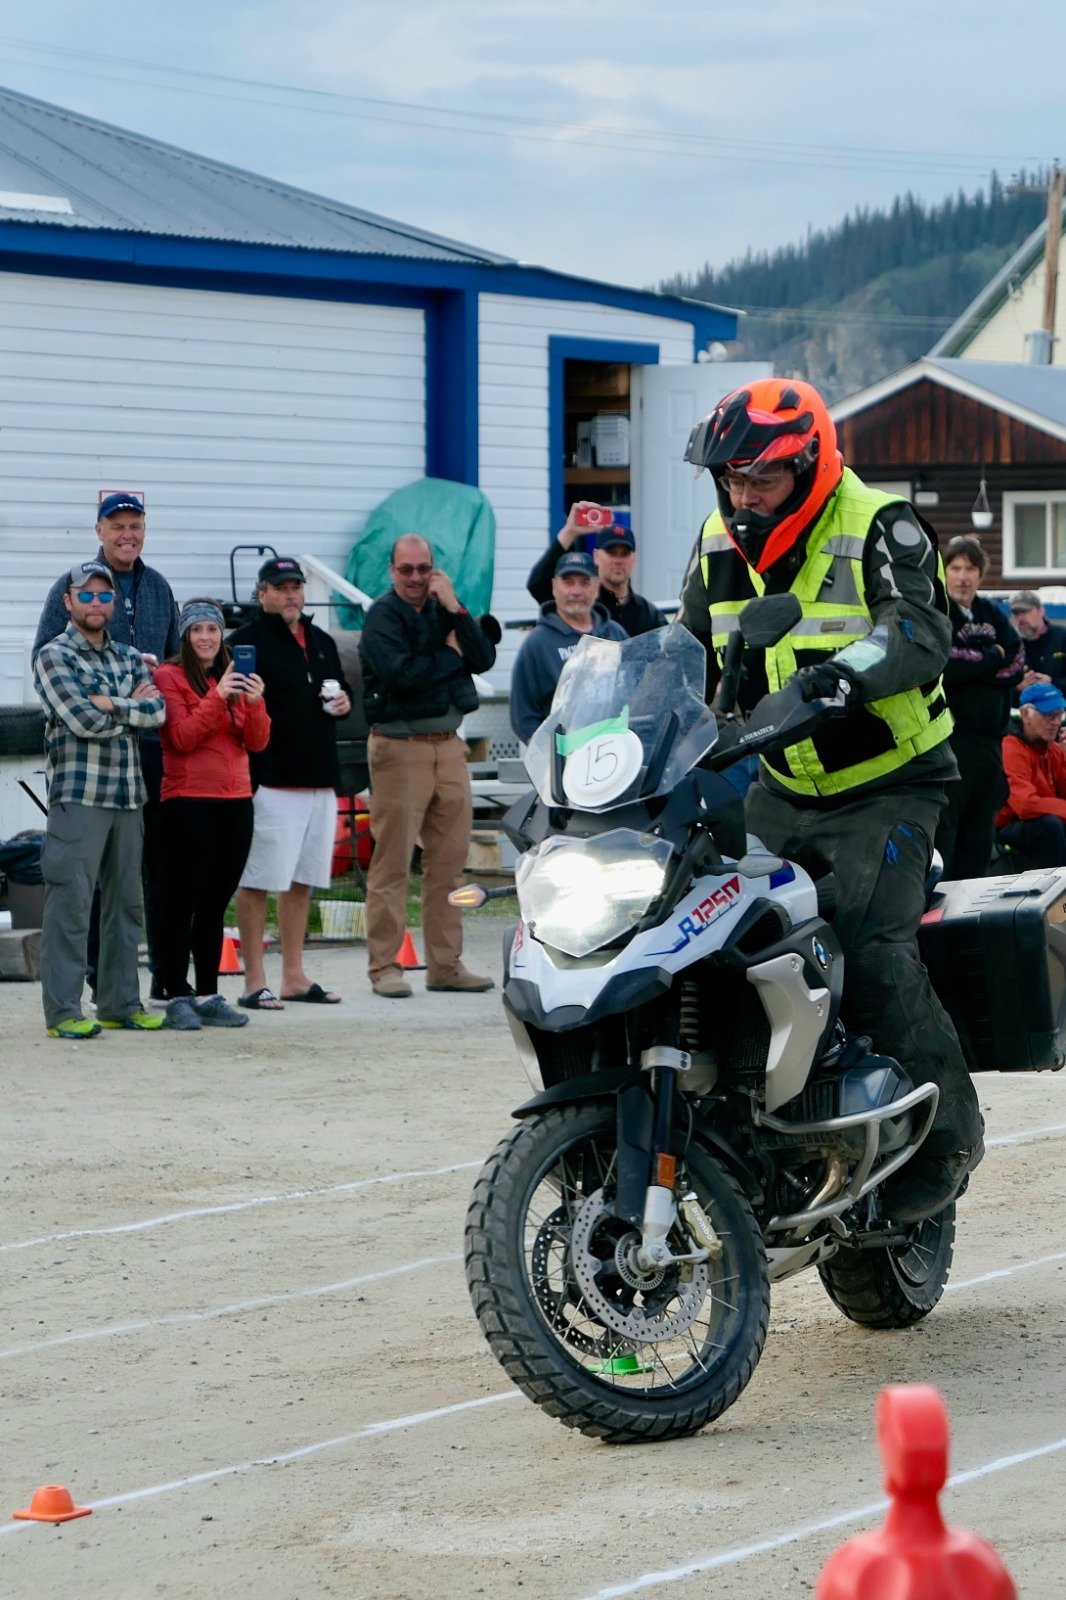 Clinton-Smout-Yukon-Adventure-Rider-Radio-Motorcycle-Podcast-6.jpg